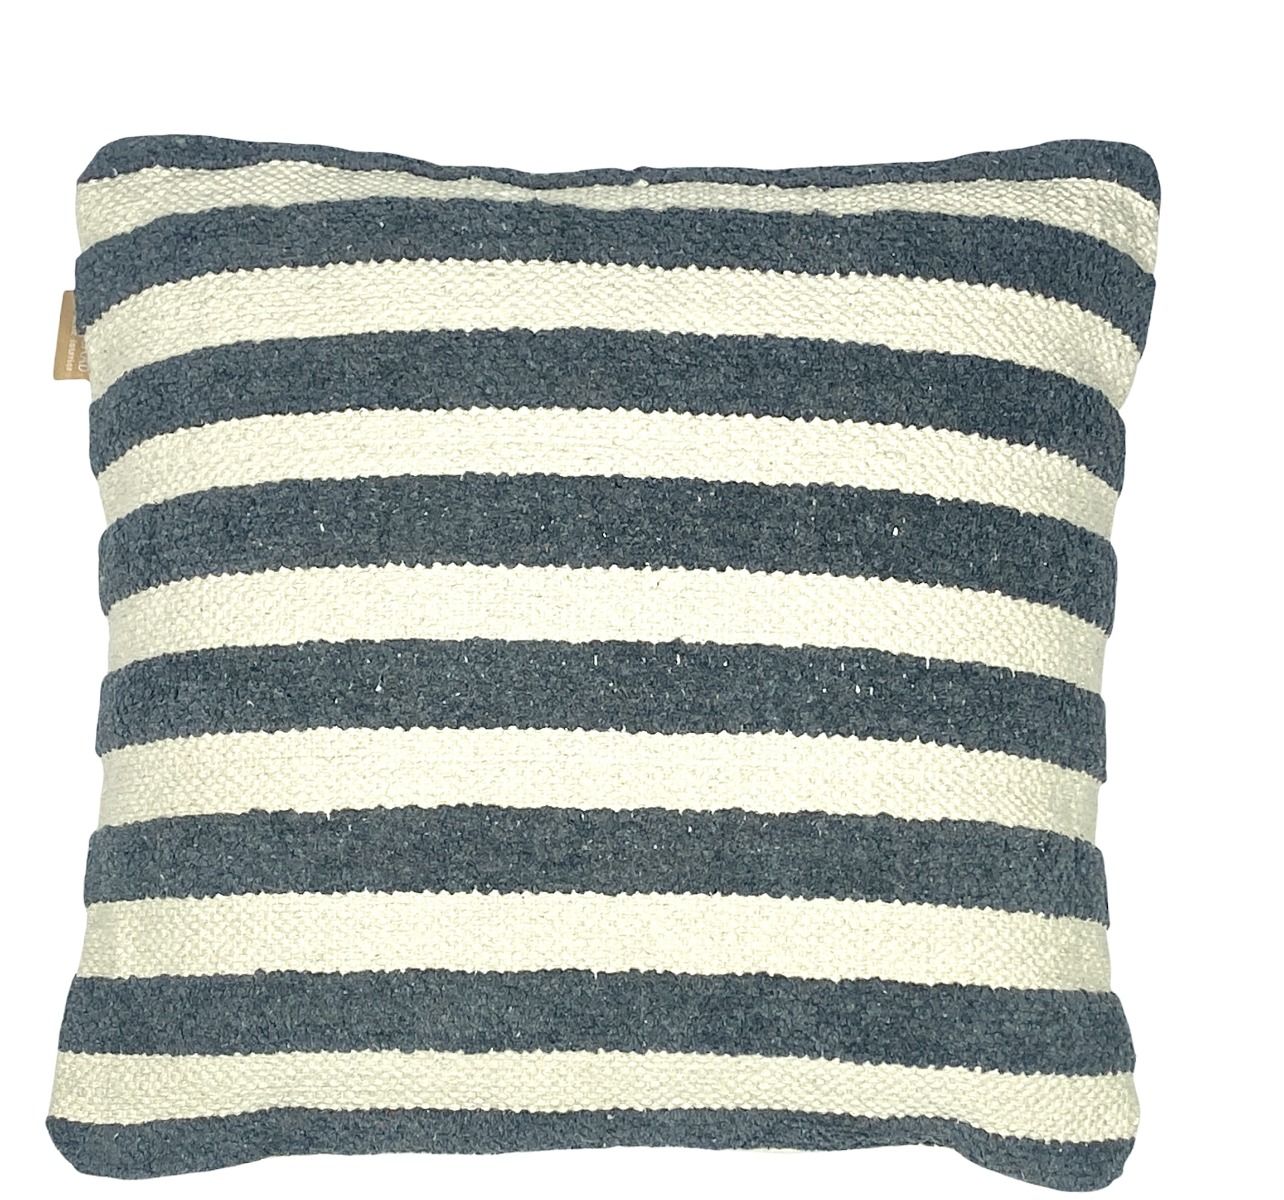 White cushion black stripes